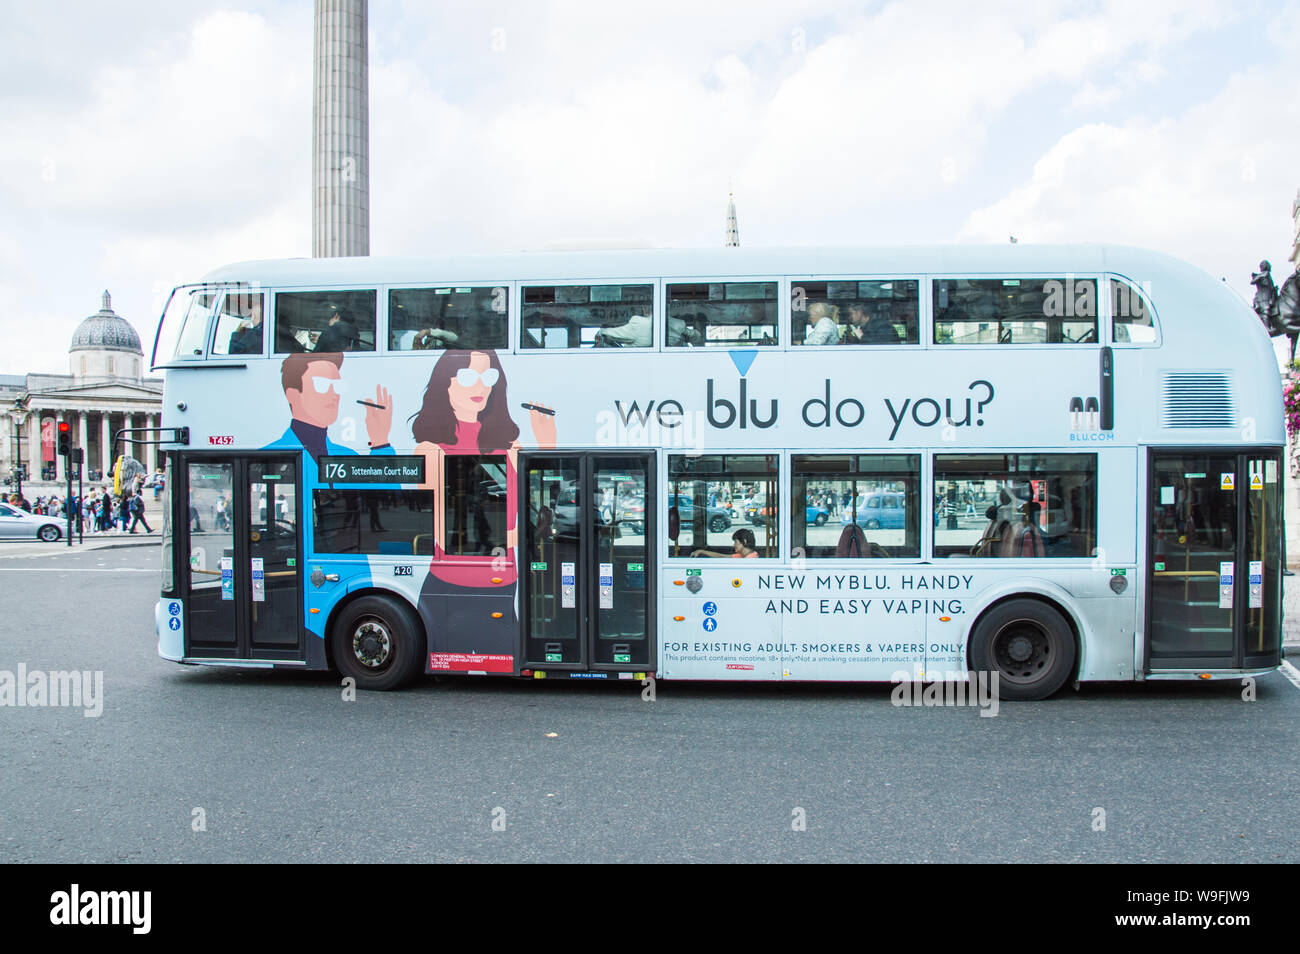 Vape Blu by Juul advertisement on London Bus Stock Photo